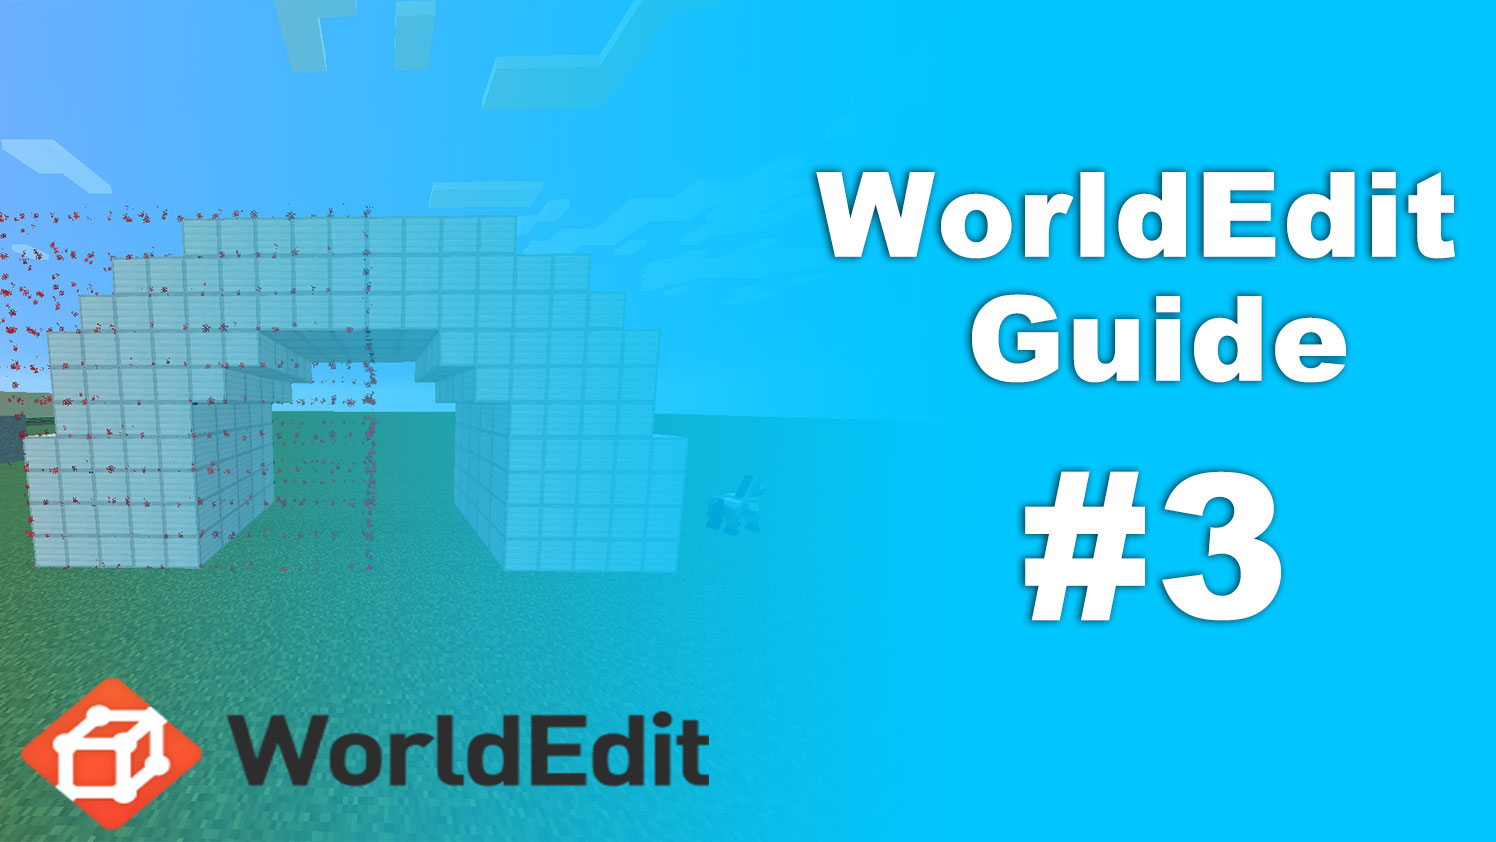 Worldedit Guide 3 クリップボード コピーと貼り付けの基本とその他 脱 初心者を目指すマインクラフト